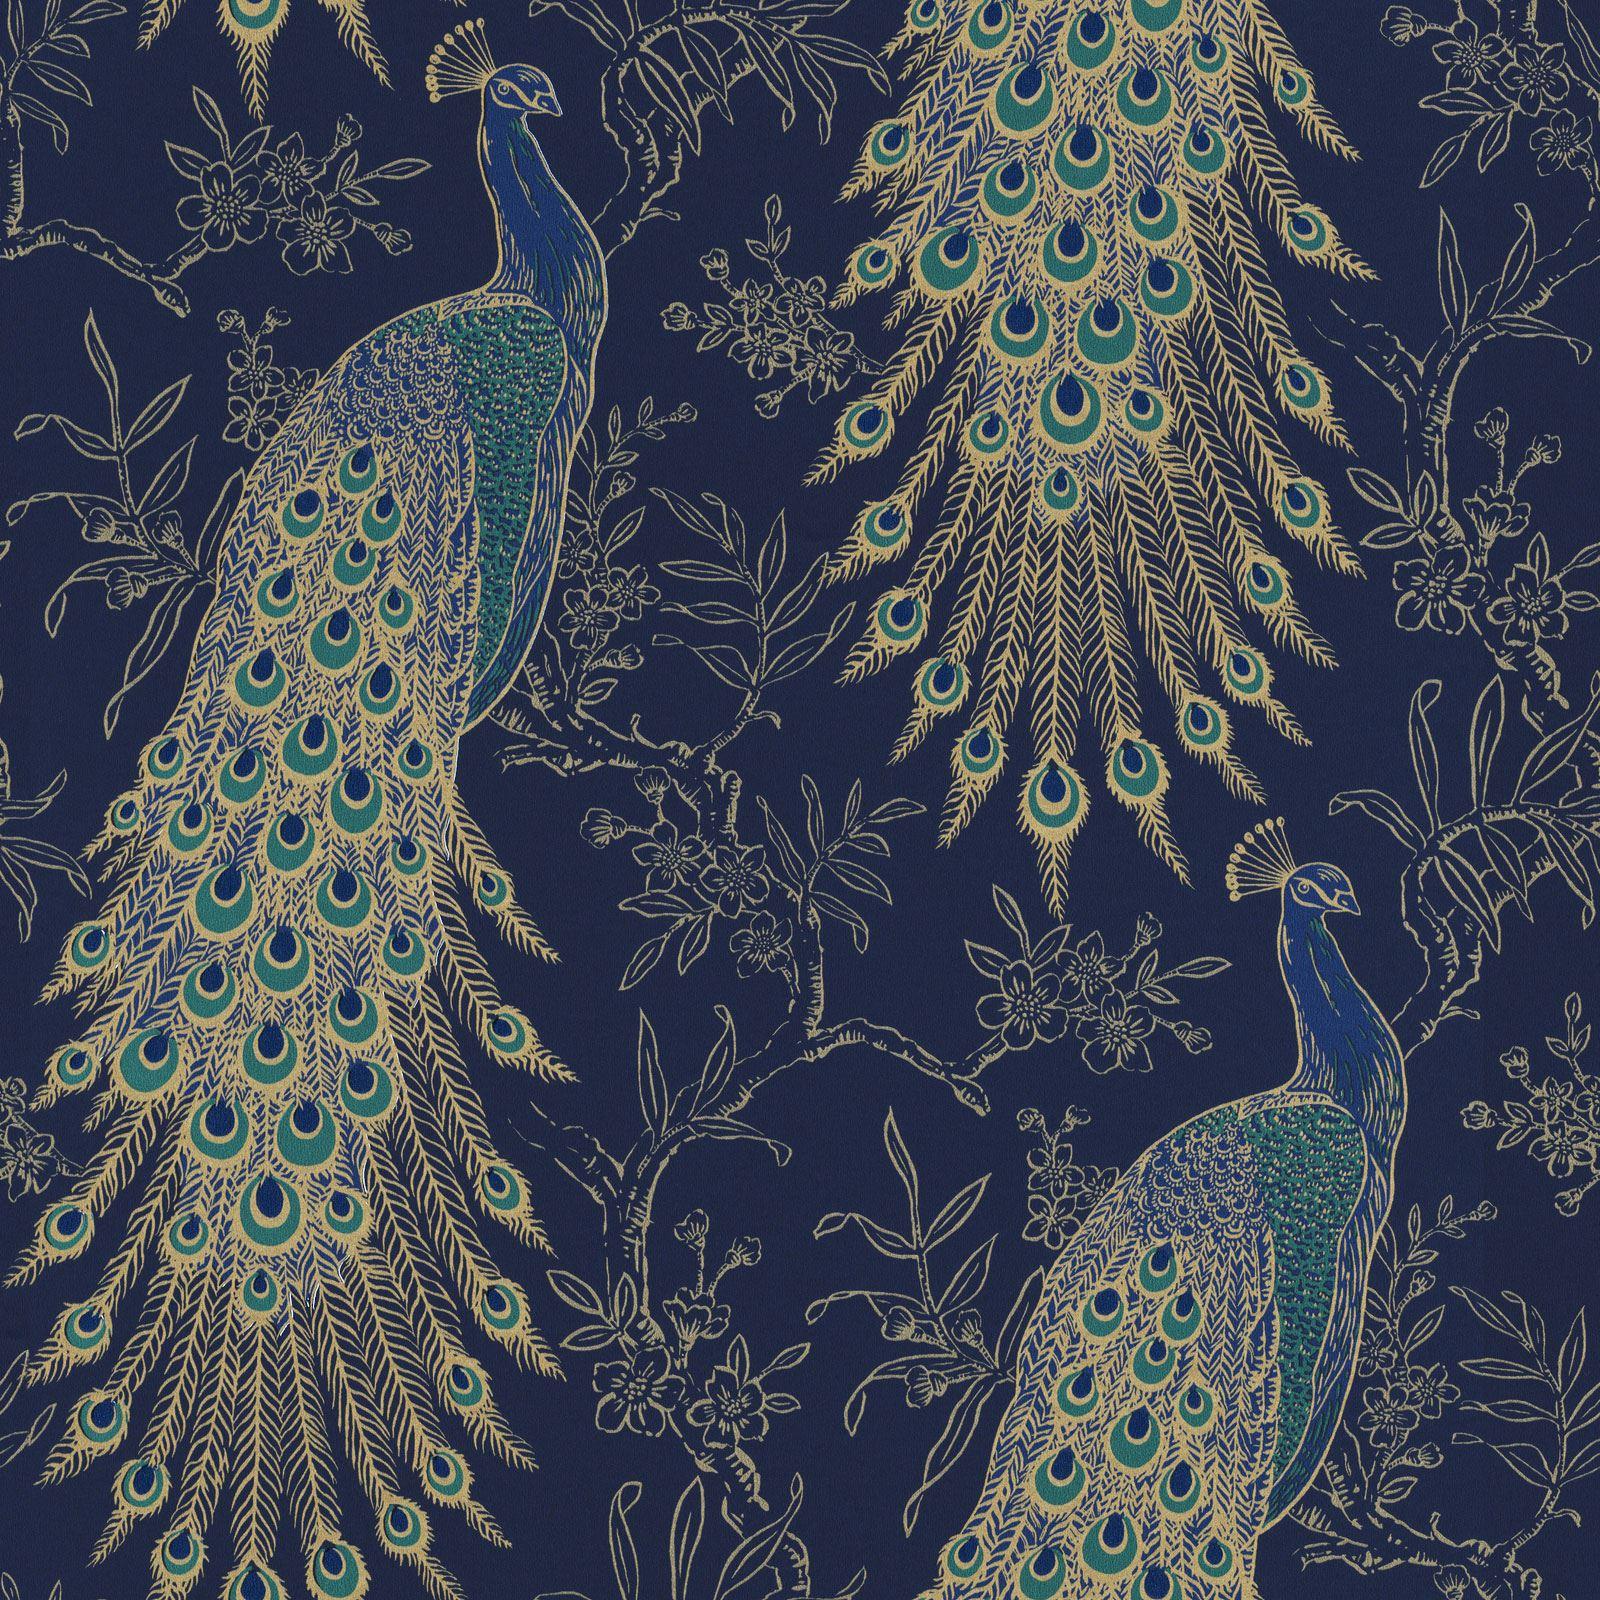 Details about Portfolio Peacock Wallpaper Navy / Gold Rasch 215700